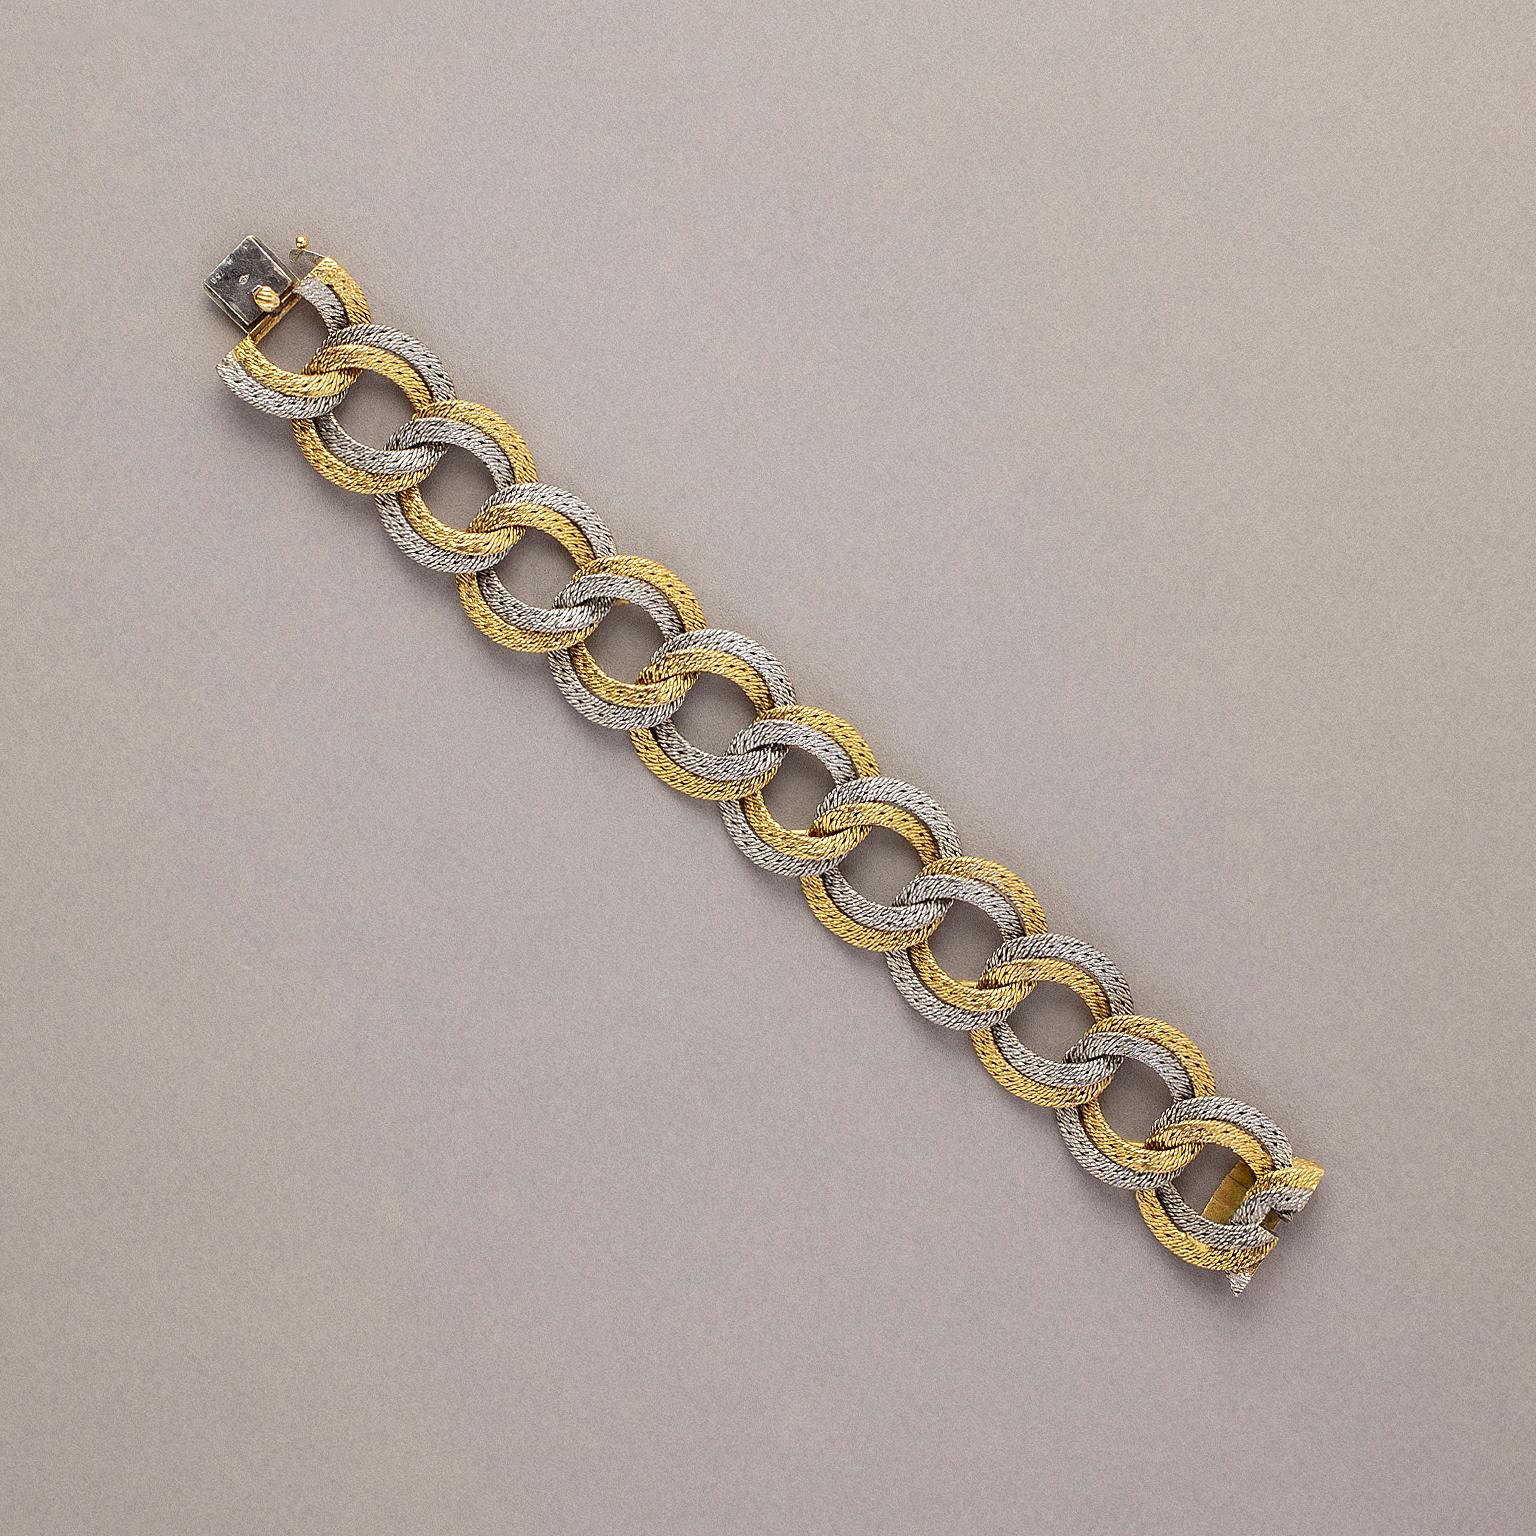 An 18 carat gold bi-color double link woven bracelet, marked: Georges Lenfant, circa 1970. 

weight: 71.53 grams
length: 19.5 cm